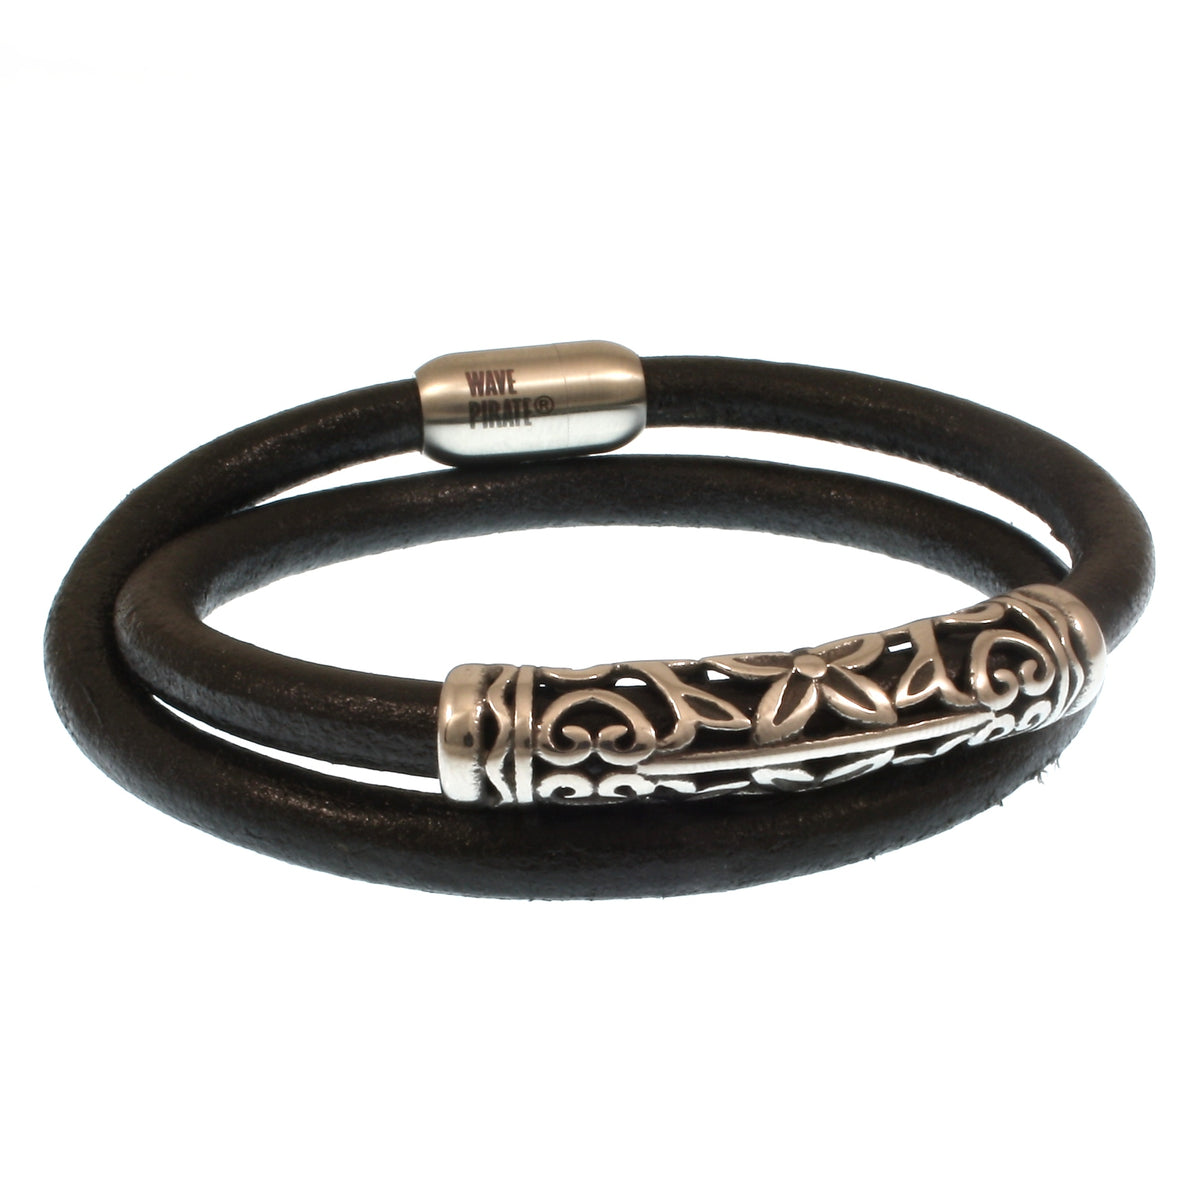 Herren-Leder-Armband-hawaii-xo-schwarz-silber-Edelstahlverschluss-hinten-wavepirate-shop-r